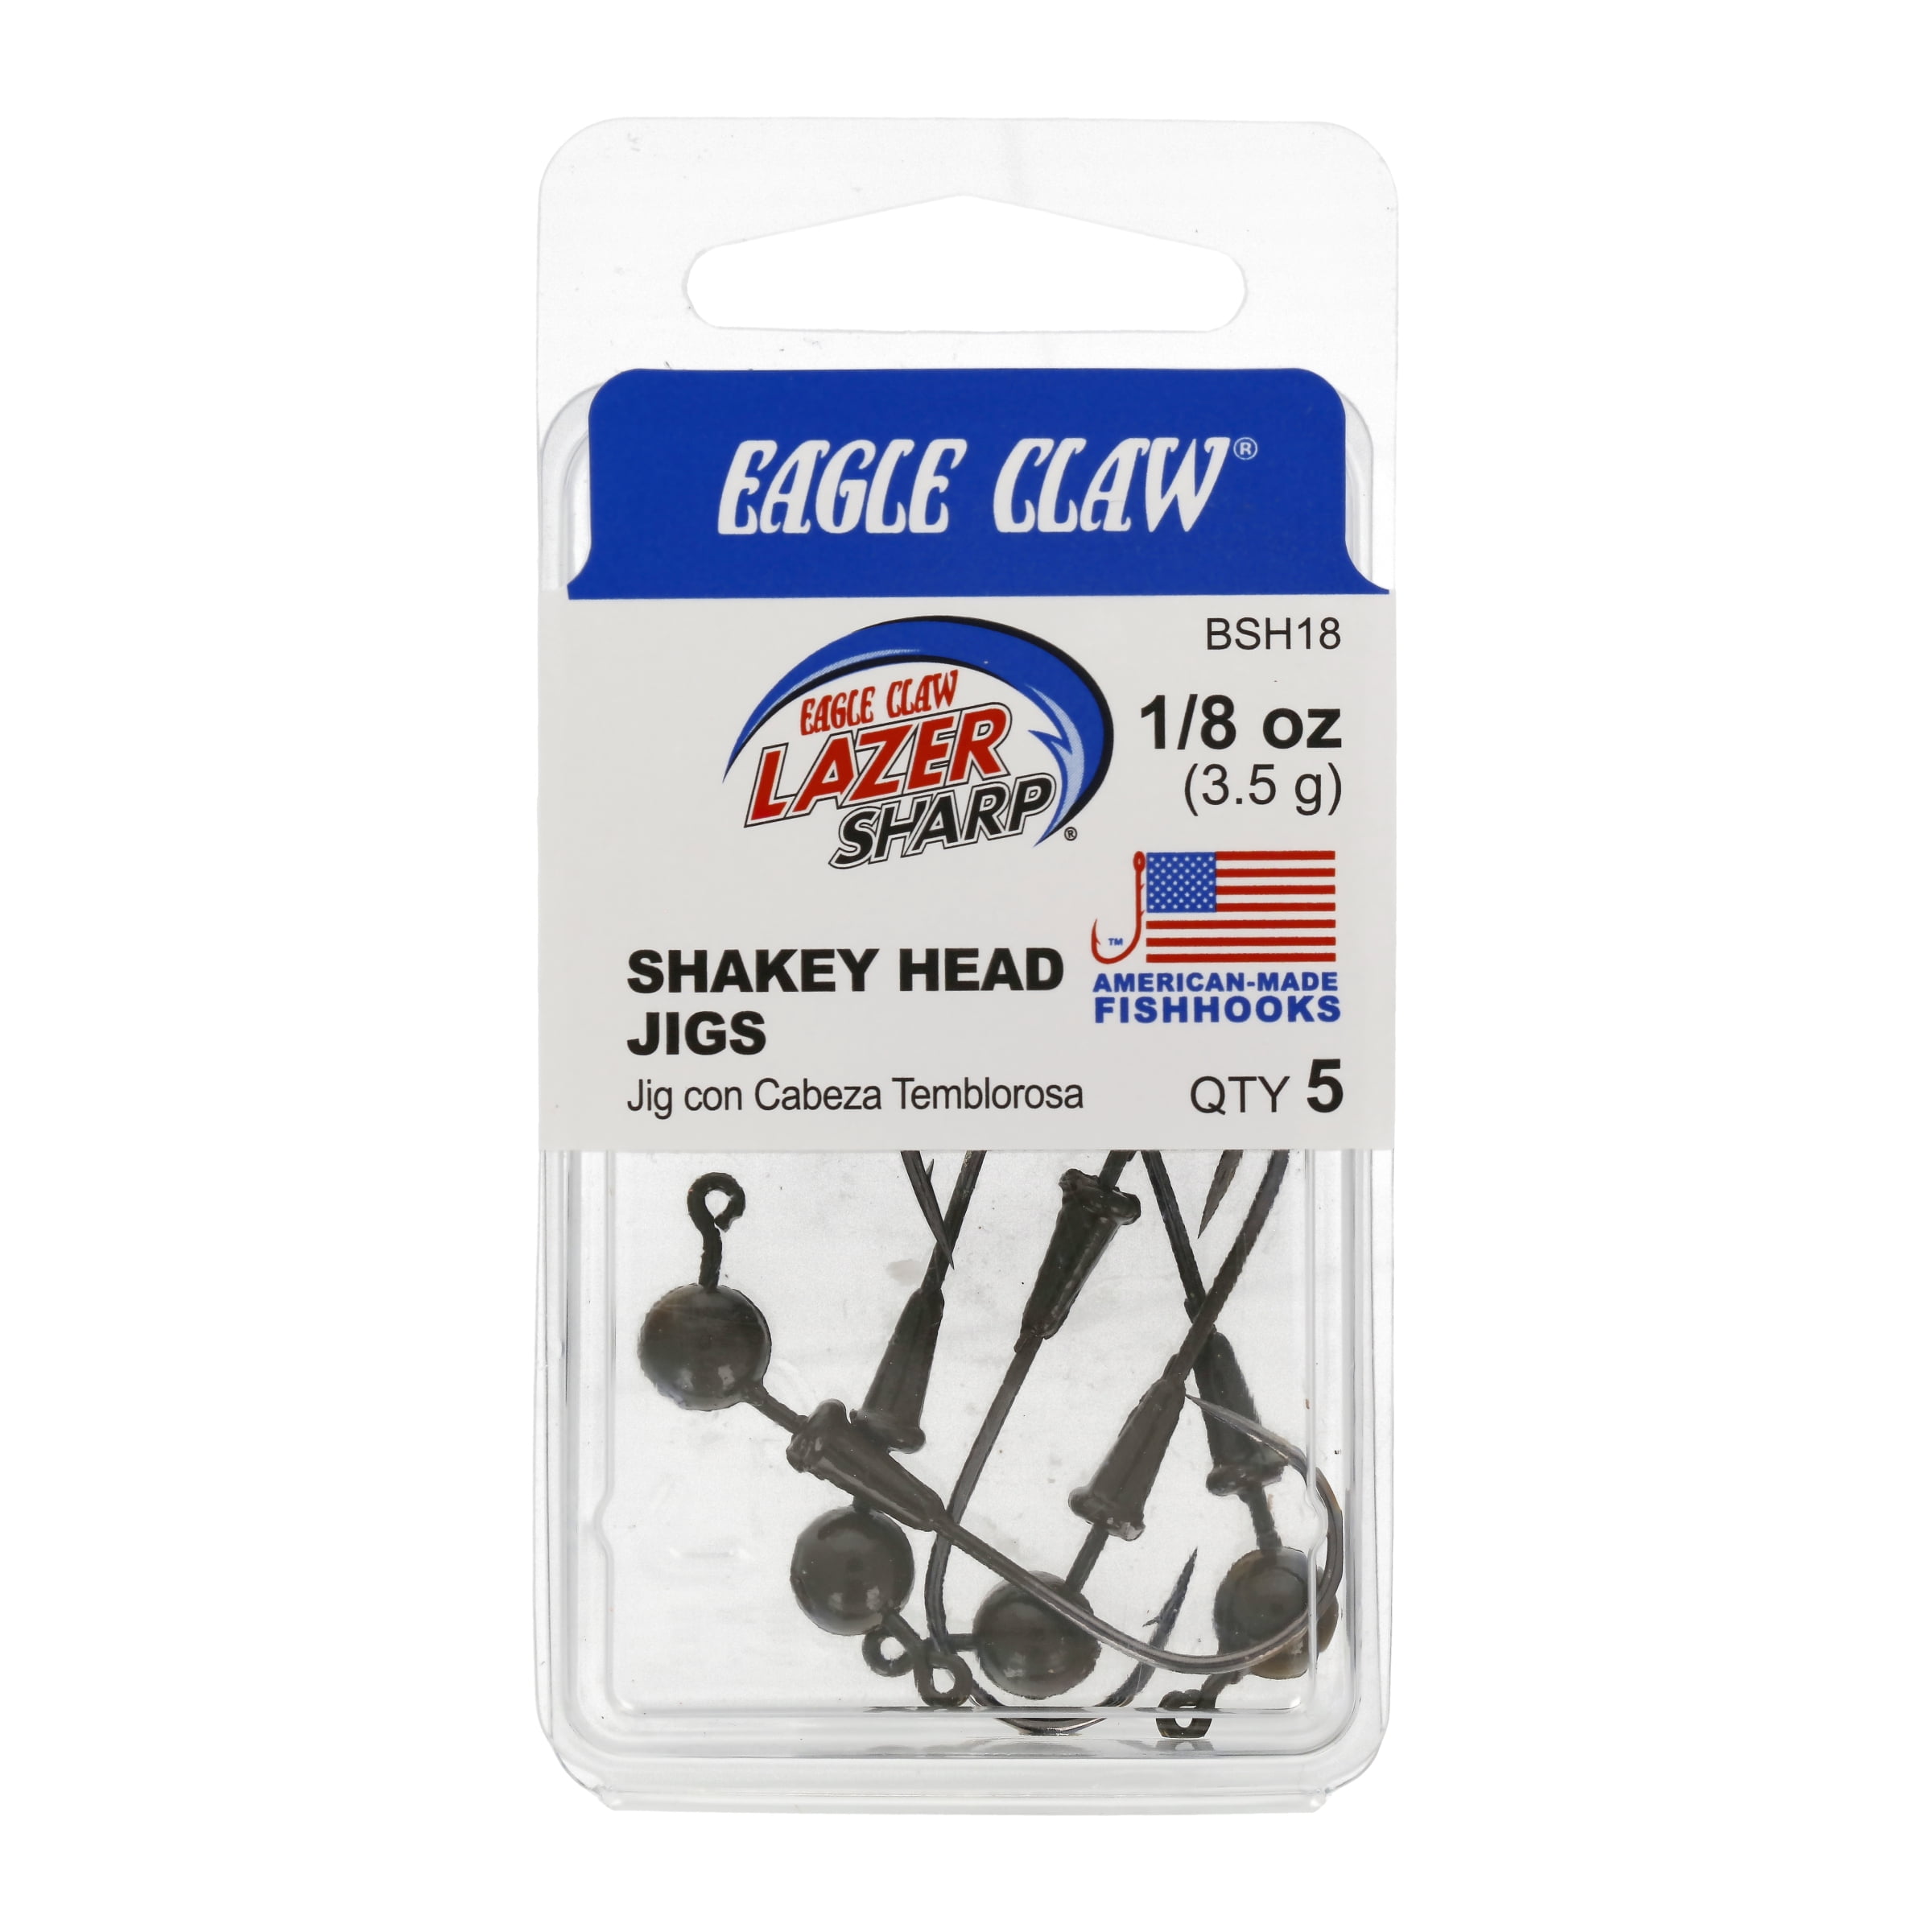 Eagle Claw Lazer Sharp Shakey Head Fishing Jig, Green Pumpkin, 1/8 oz.,  BSH18